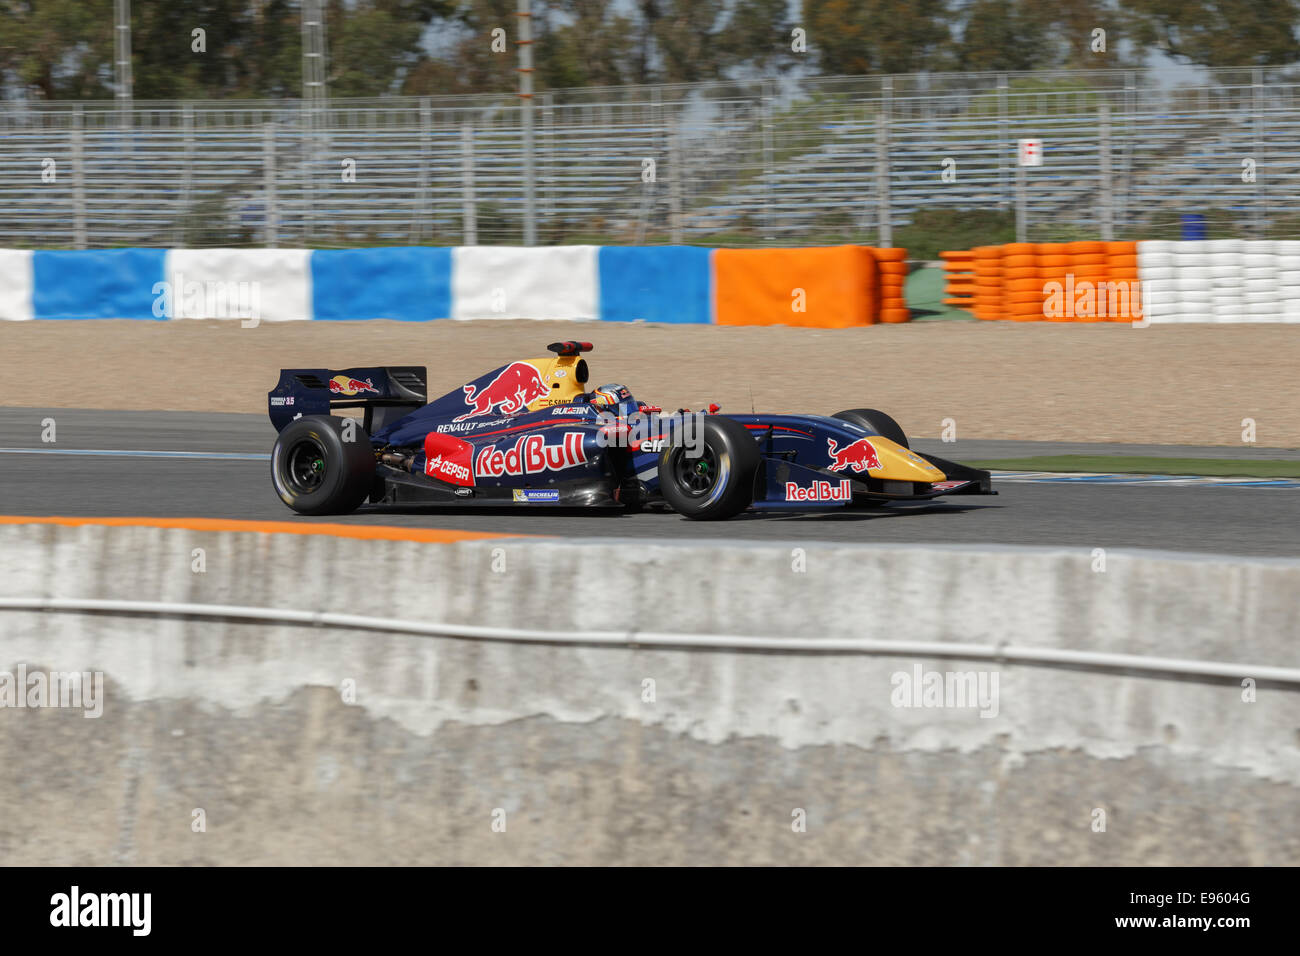 JEREZ DE LA FRONTERA, SPAIN - OCTOBER 19, 2014: Carlos Sainz of DAMS Team drives his car at Jerez racetrack Stock Photo